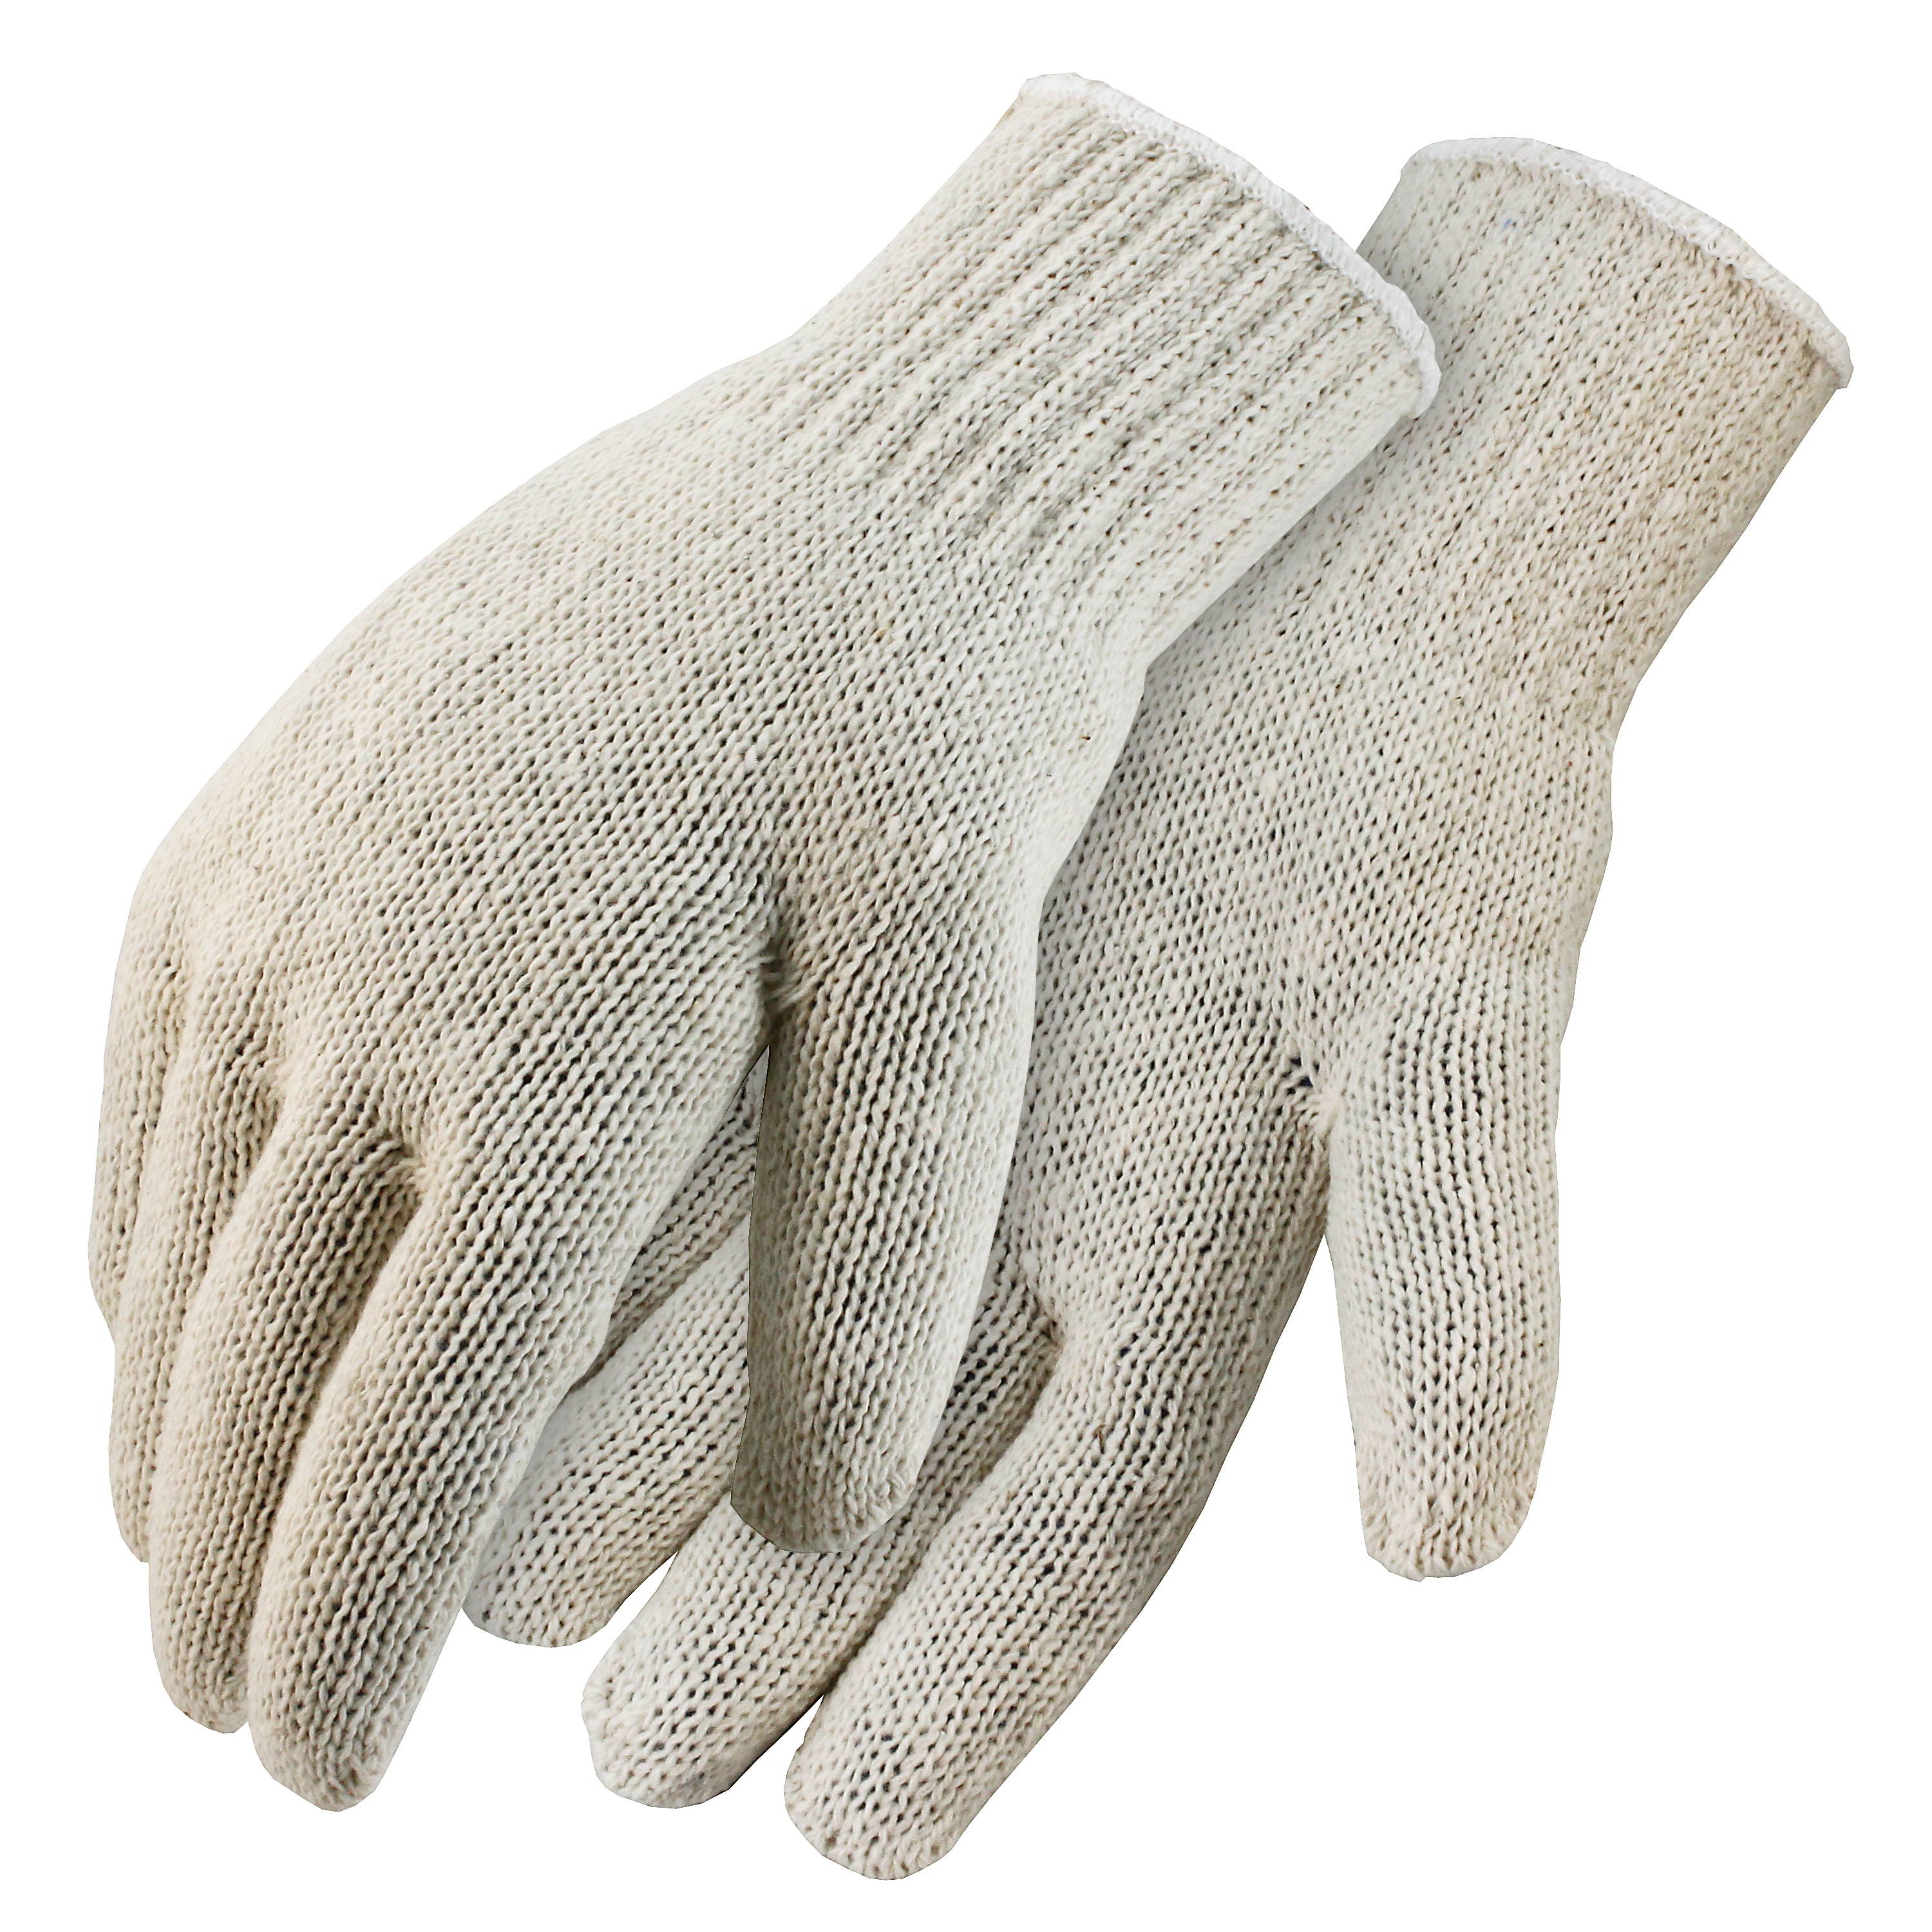 String Knit Gloves, Ladies' Cotton Blend